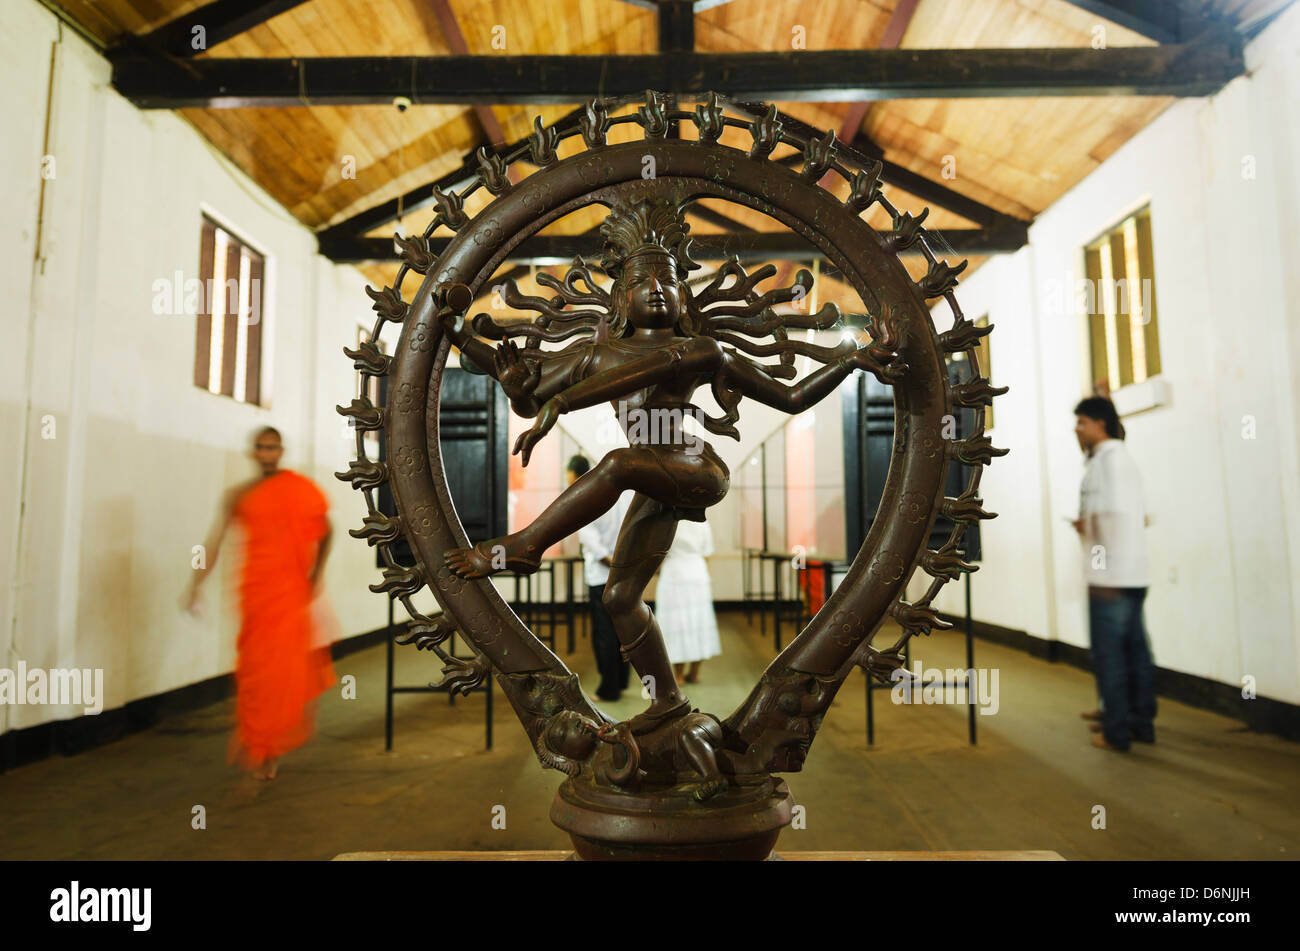 Sri Lanka, North Central Province, Anuradhapura, UNESCO World Heritage Site, Archaeological museum wood carving of Shiva Natraja Stock Photo